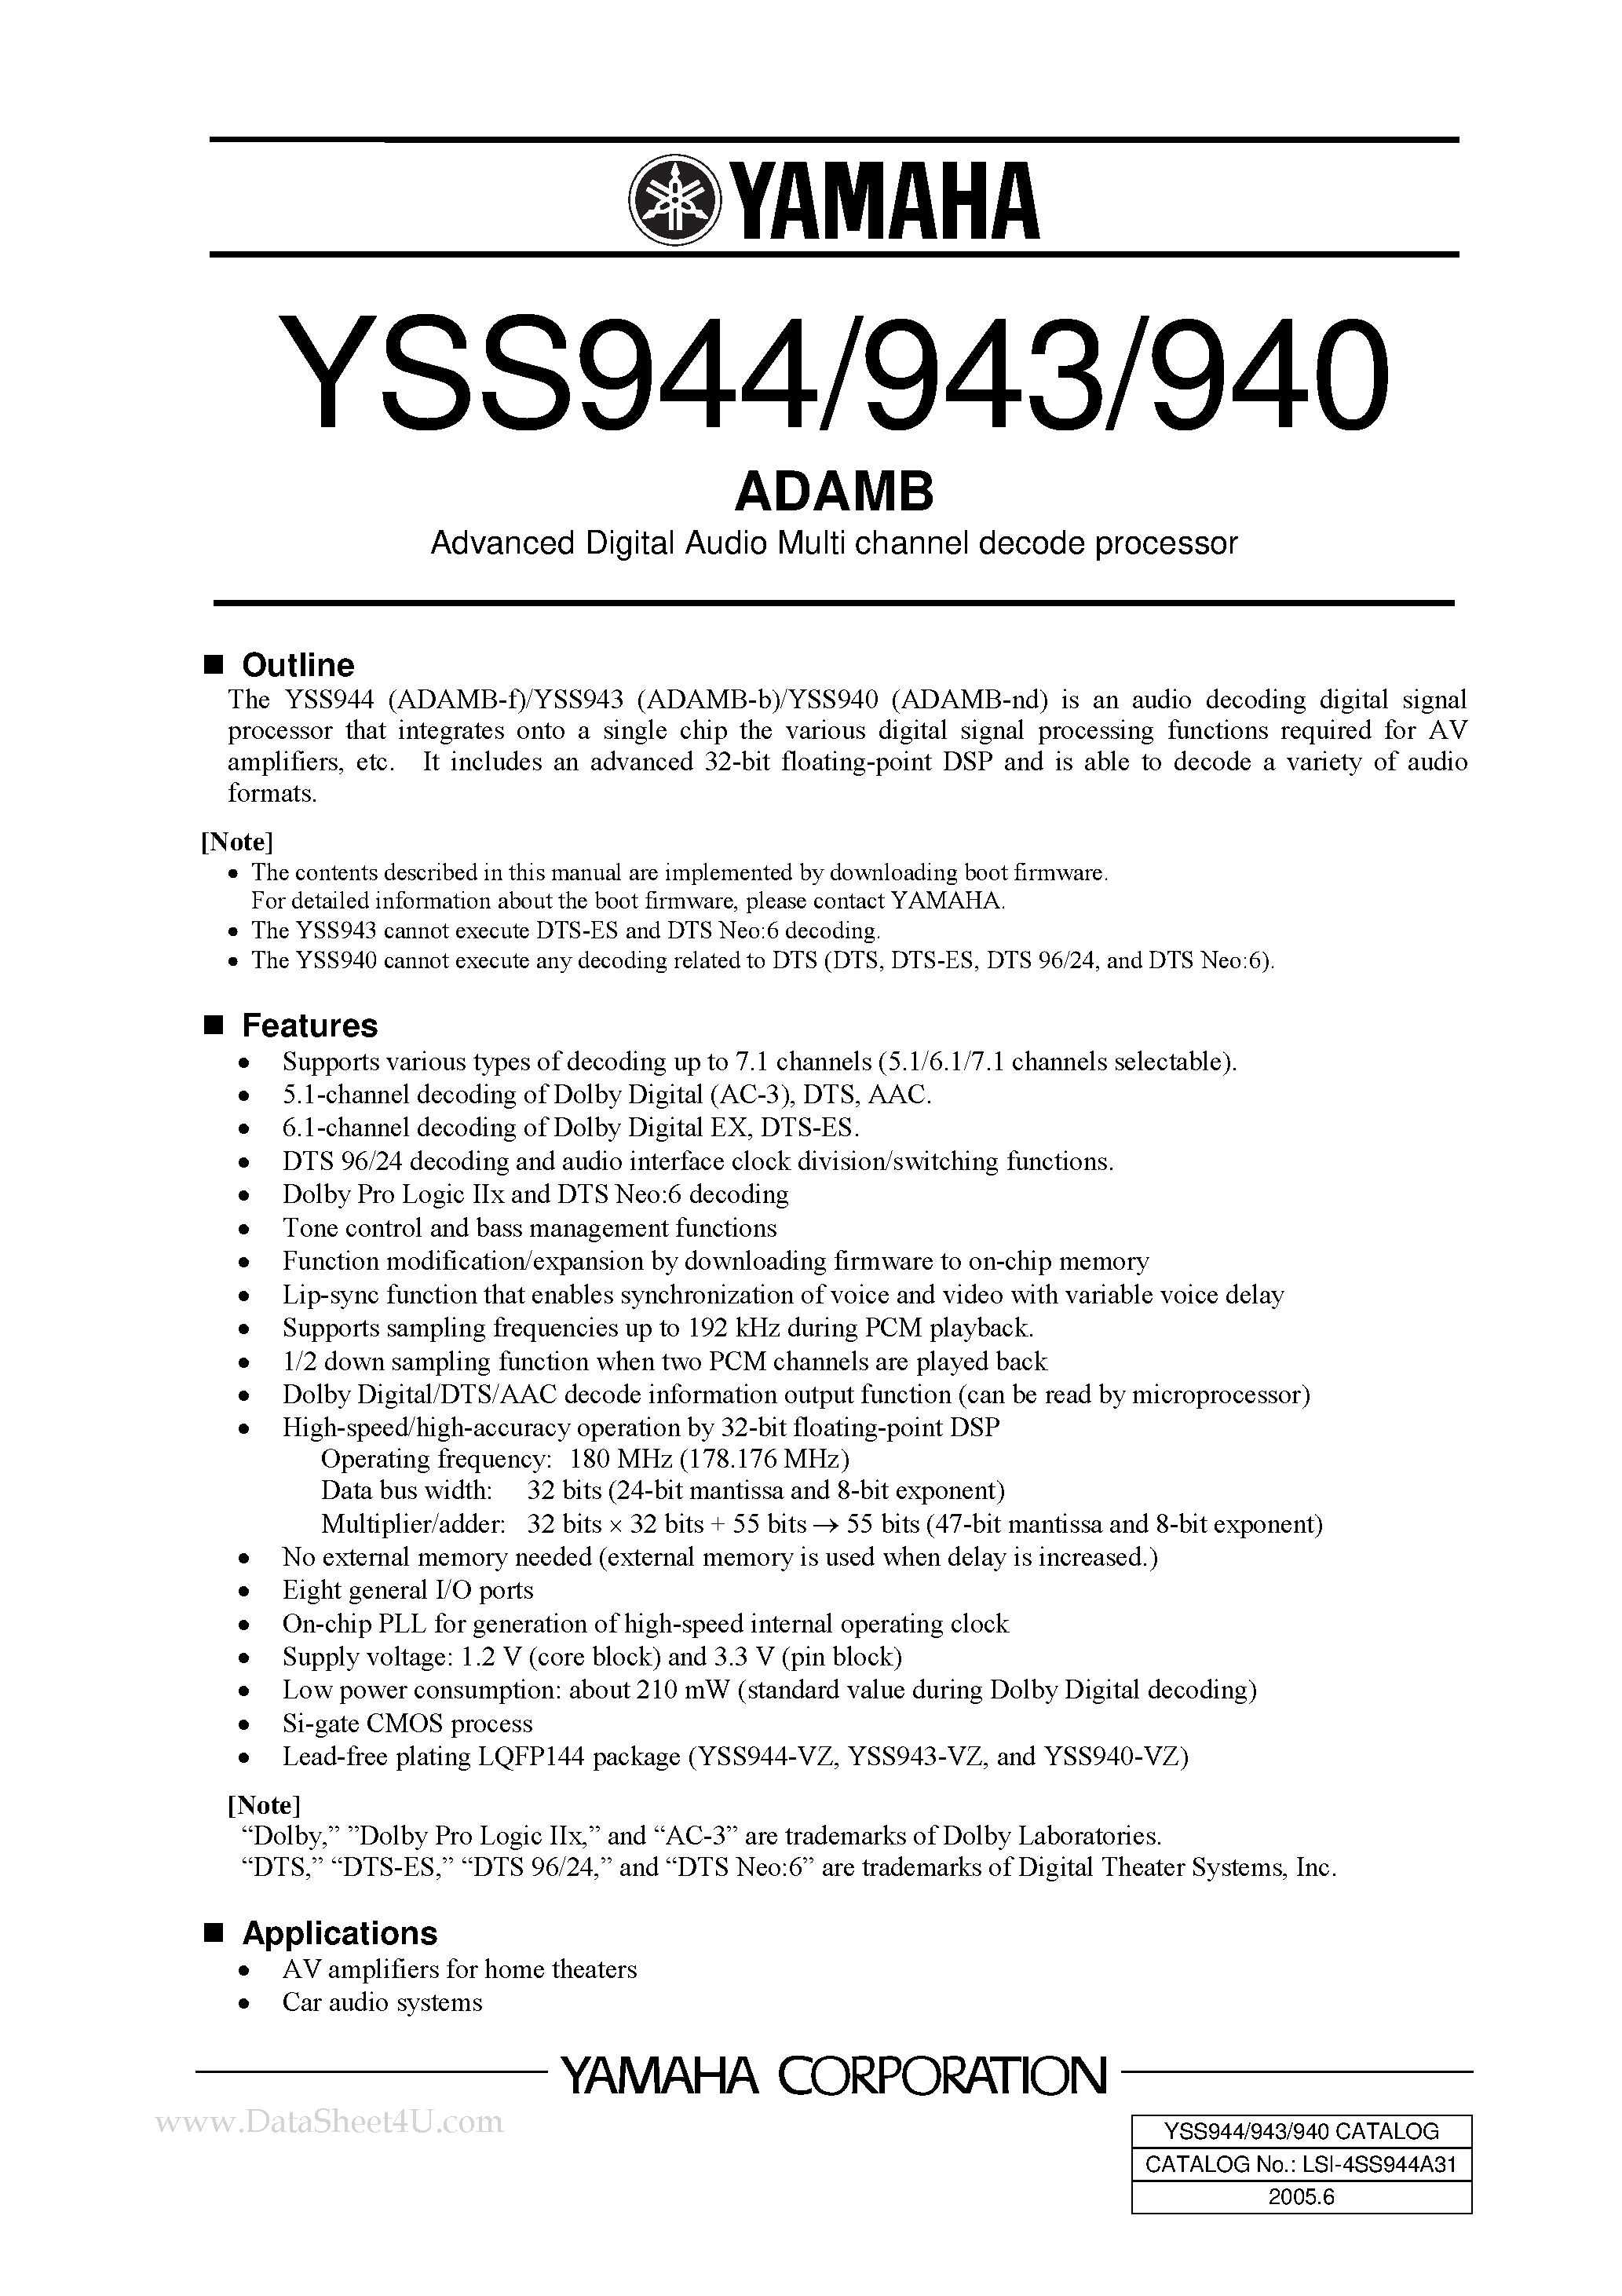 Datasheet YSS940 - (YSS940 - YSS944) ADAMB Advanced Digital Audio Multi channel decode processor page 1